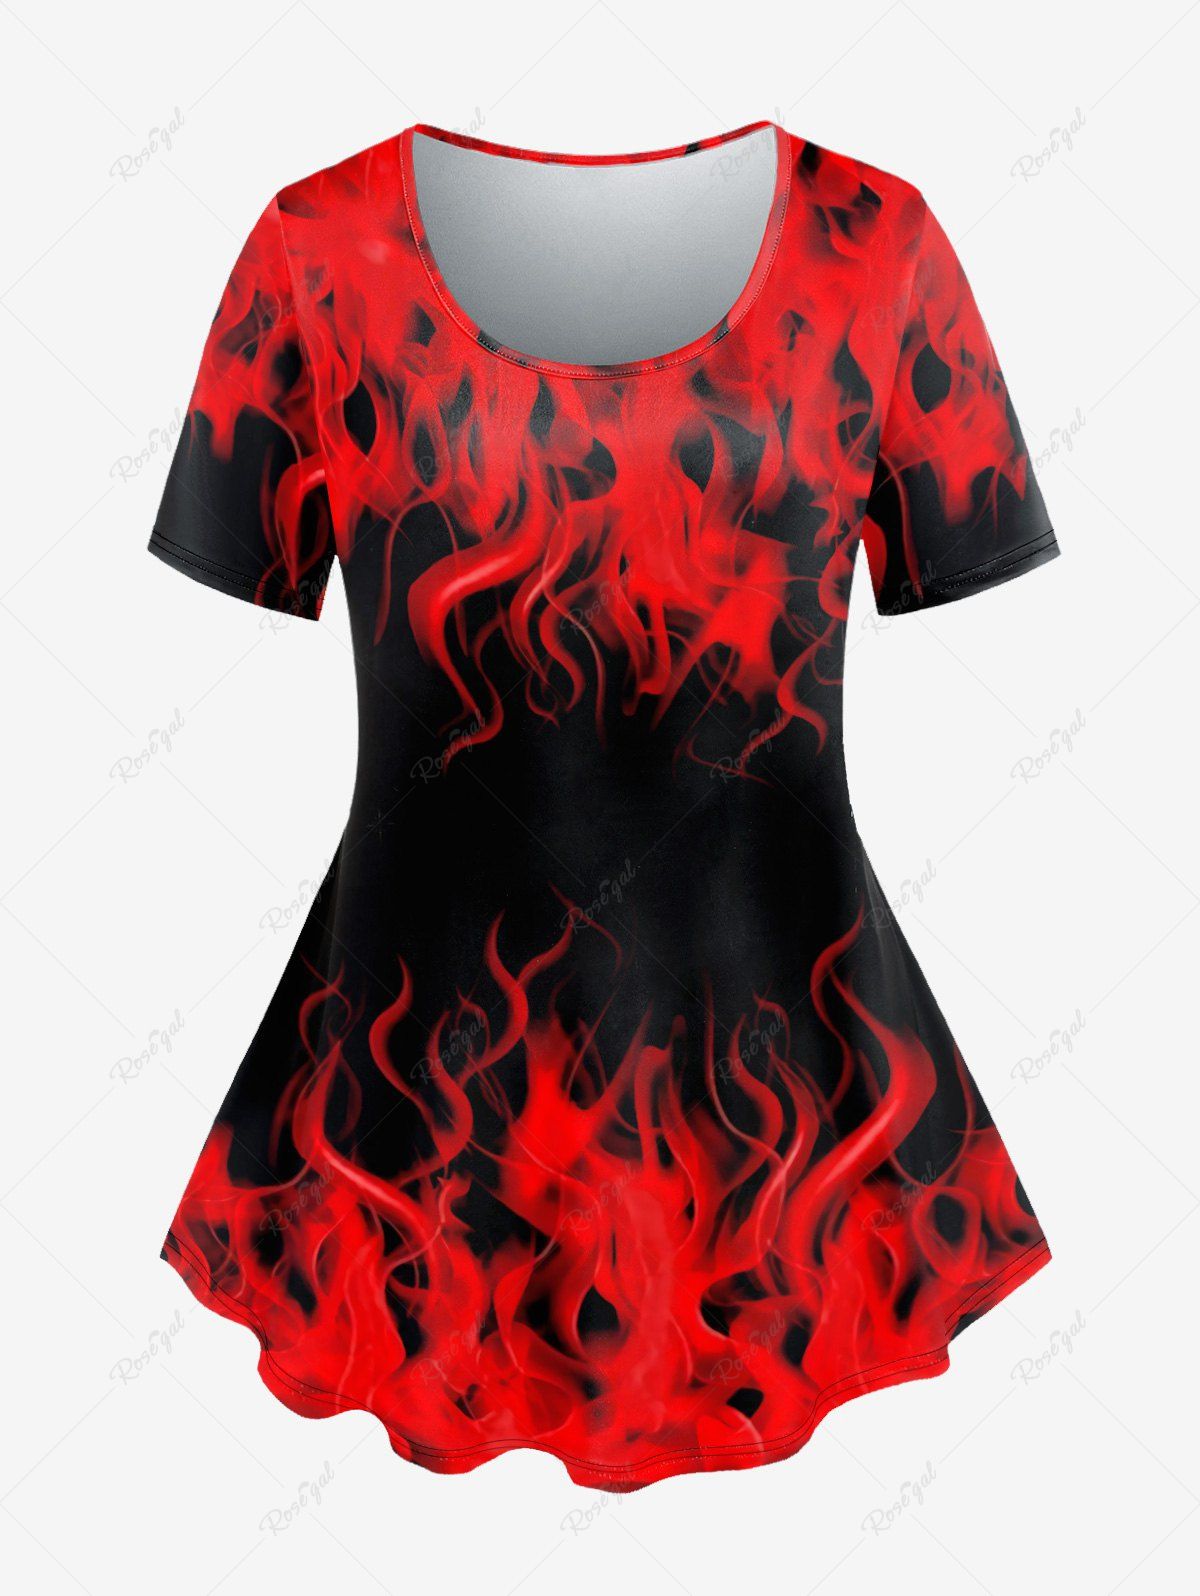 Shop Gothic 3D Flame Print Short Sleeve T-Shirt  